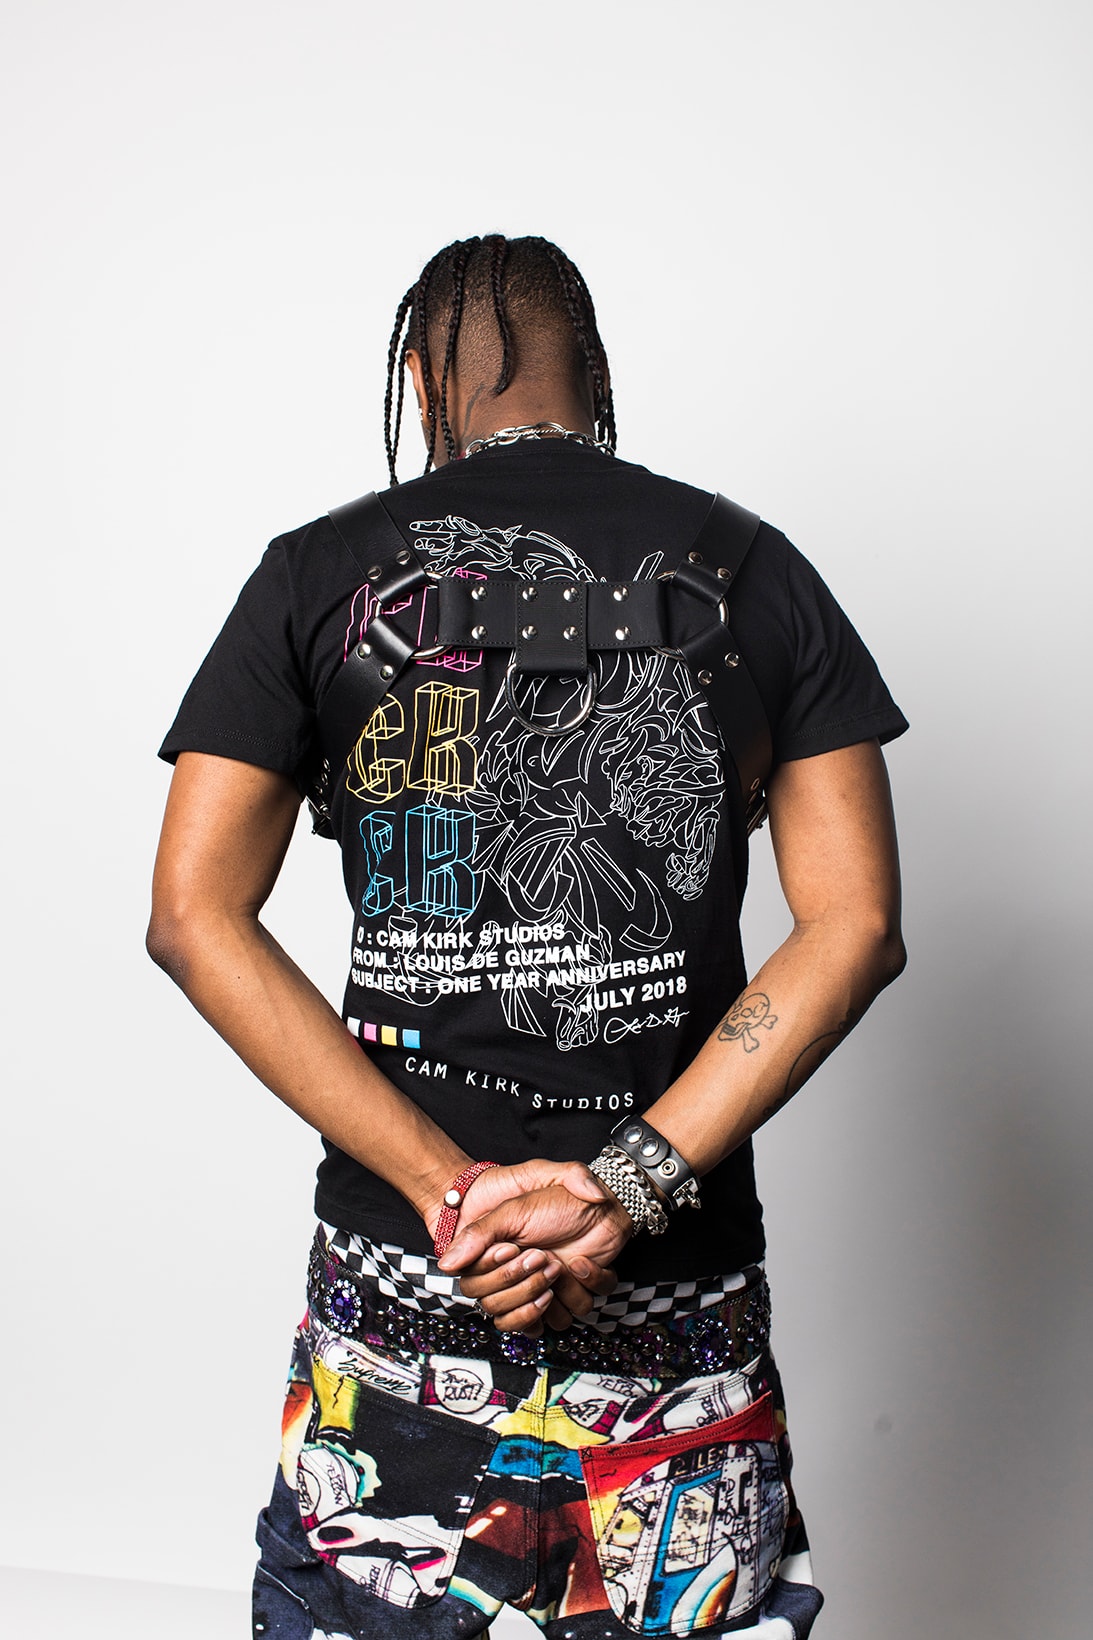 Louis De Guzman Cam Kirk Collaboration bloody osiris Studios T Shirt One 1 Year Anniversary Staff